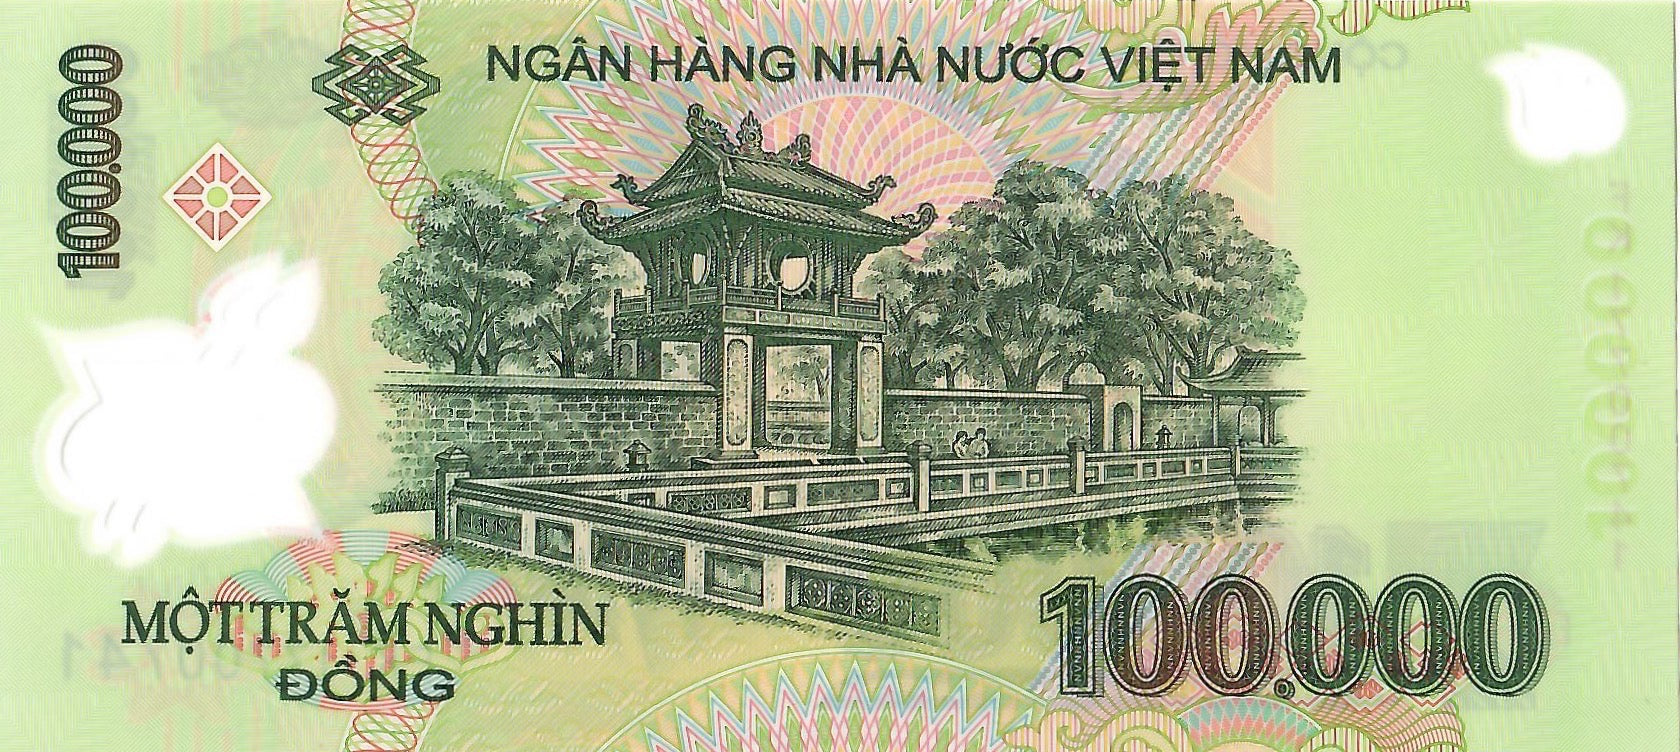 Vietnam 100,000 Dong Banknote, 2020, P-122Q, UNC, Polymer